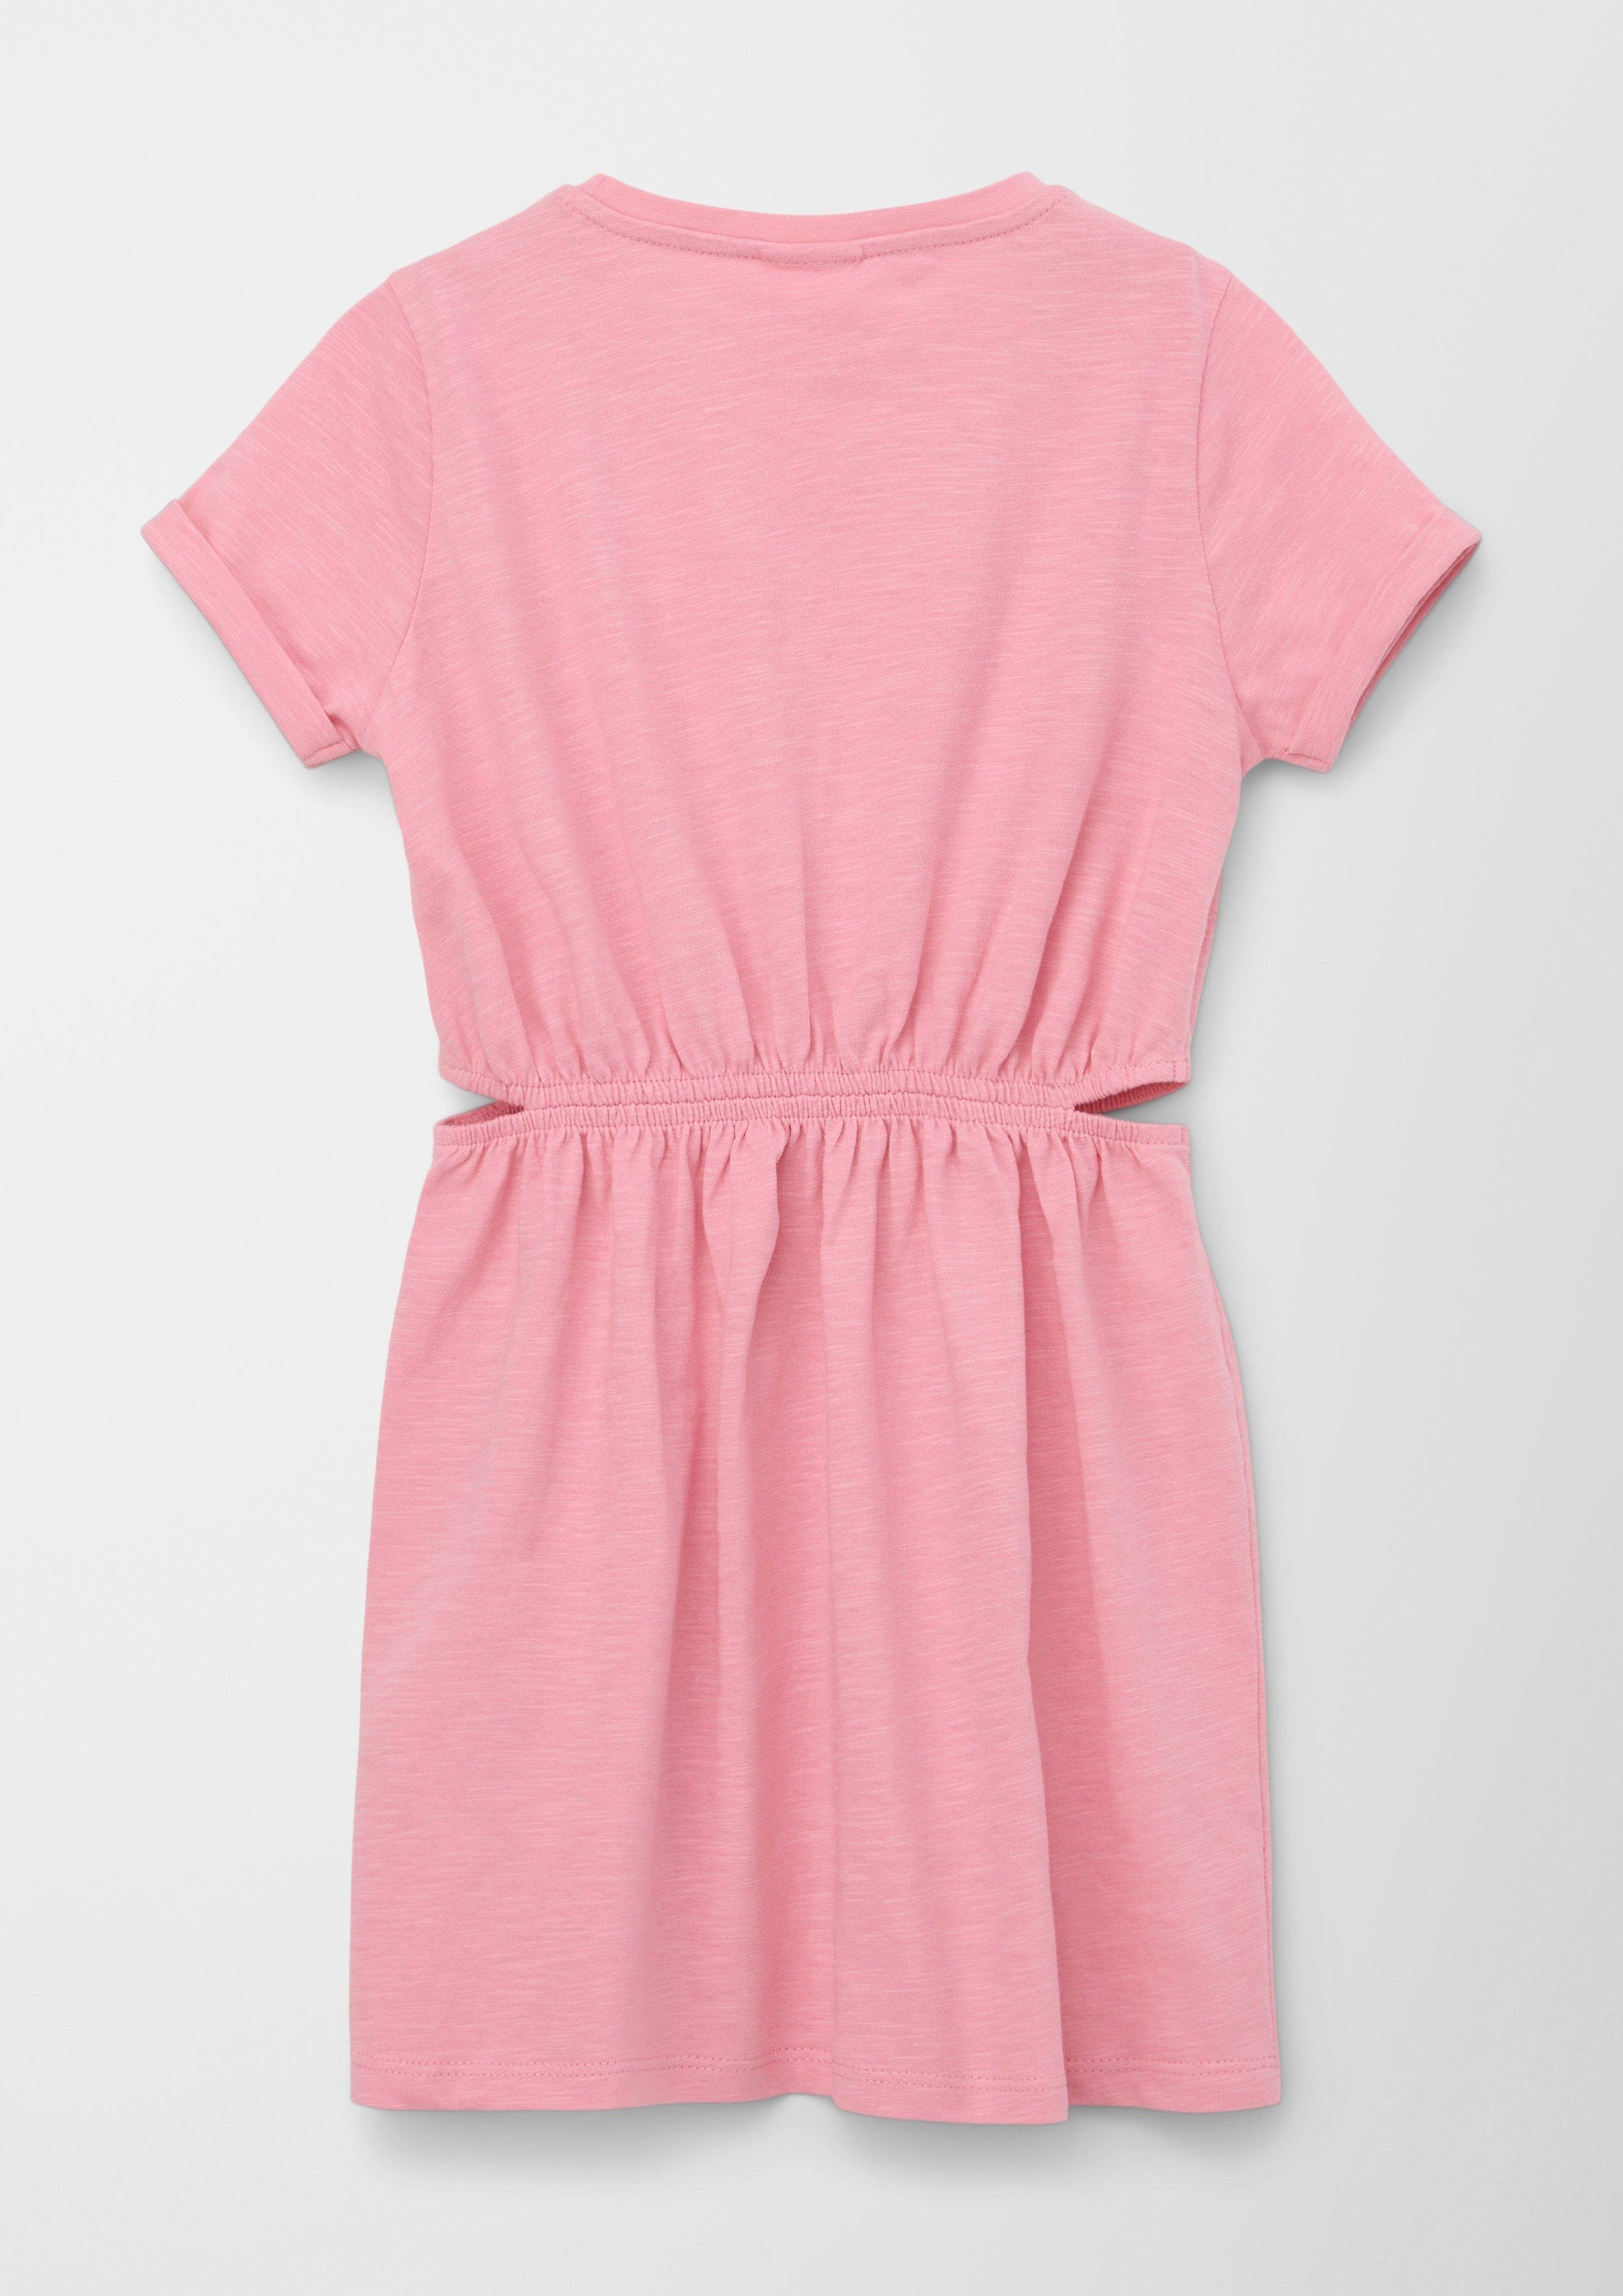 Raffung Kleid Out, Print-Detail mit Cut rosa Minikleid s.Oliver